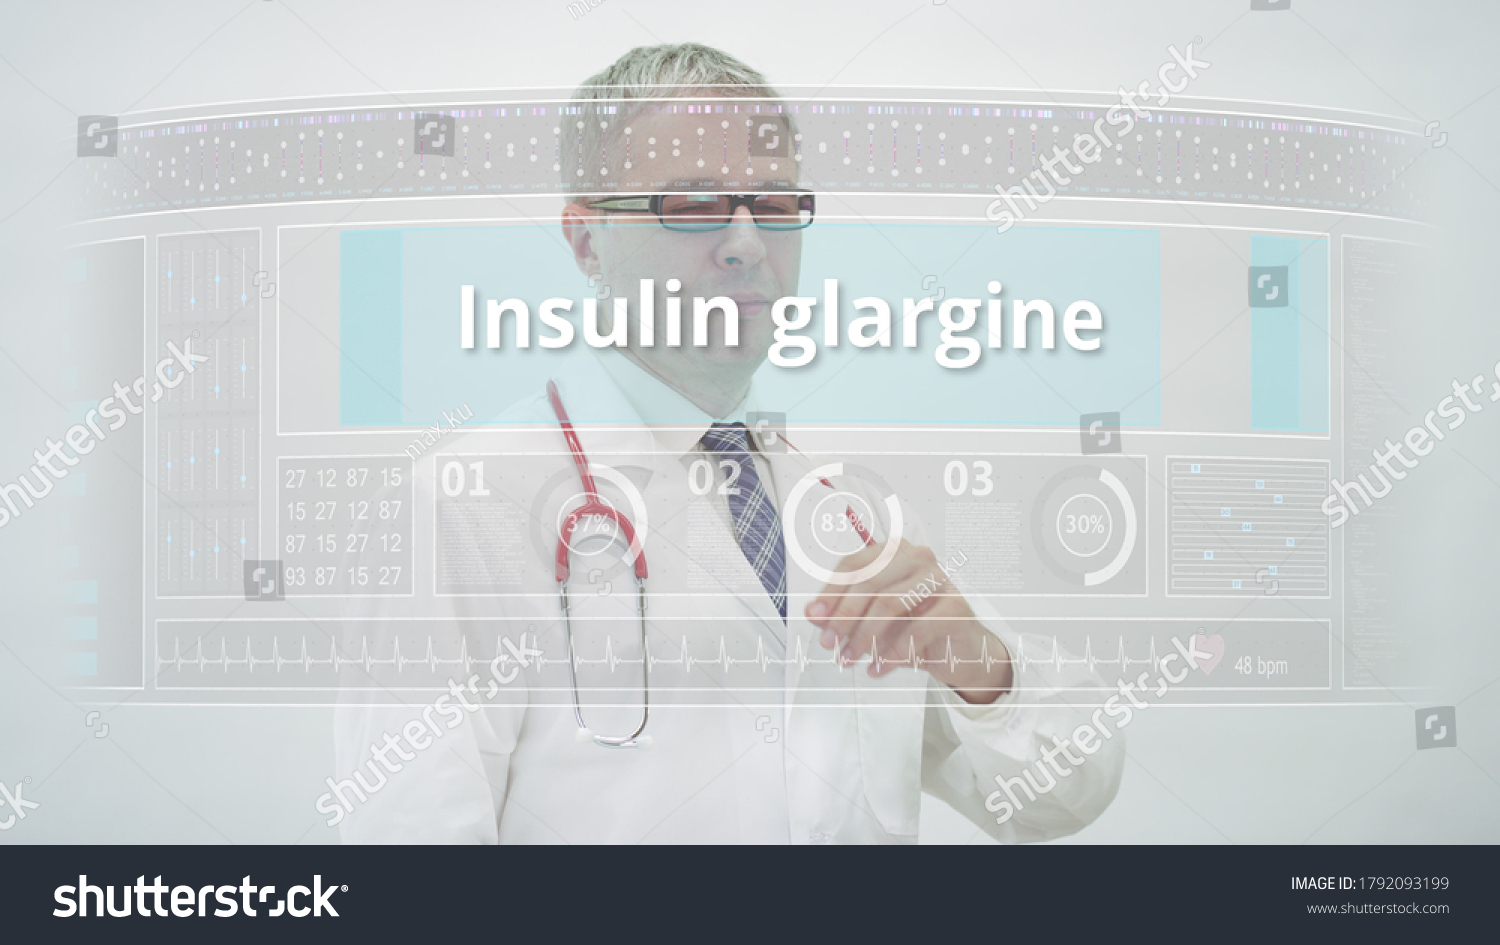 Doctor scrolls to INSULIN GLARGINE generic drug name on a touchscreen display